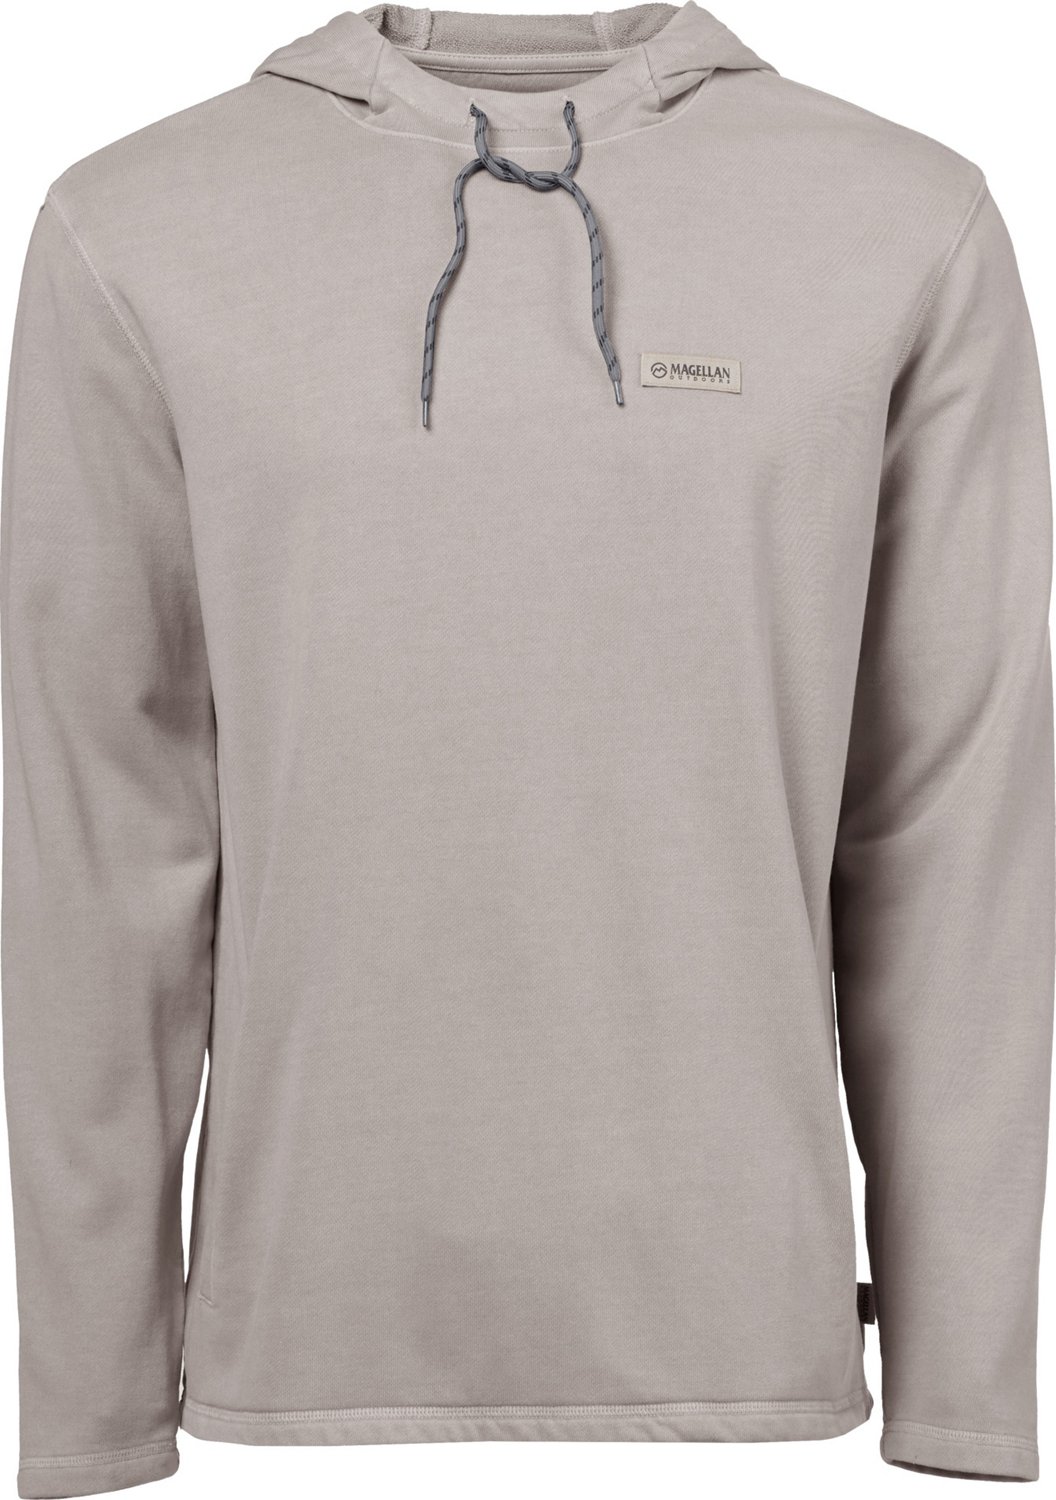 magellan hooded fishing shirt - Shop The Best Discounts Online OFF 61%